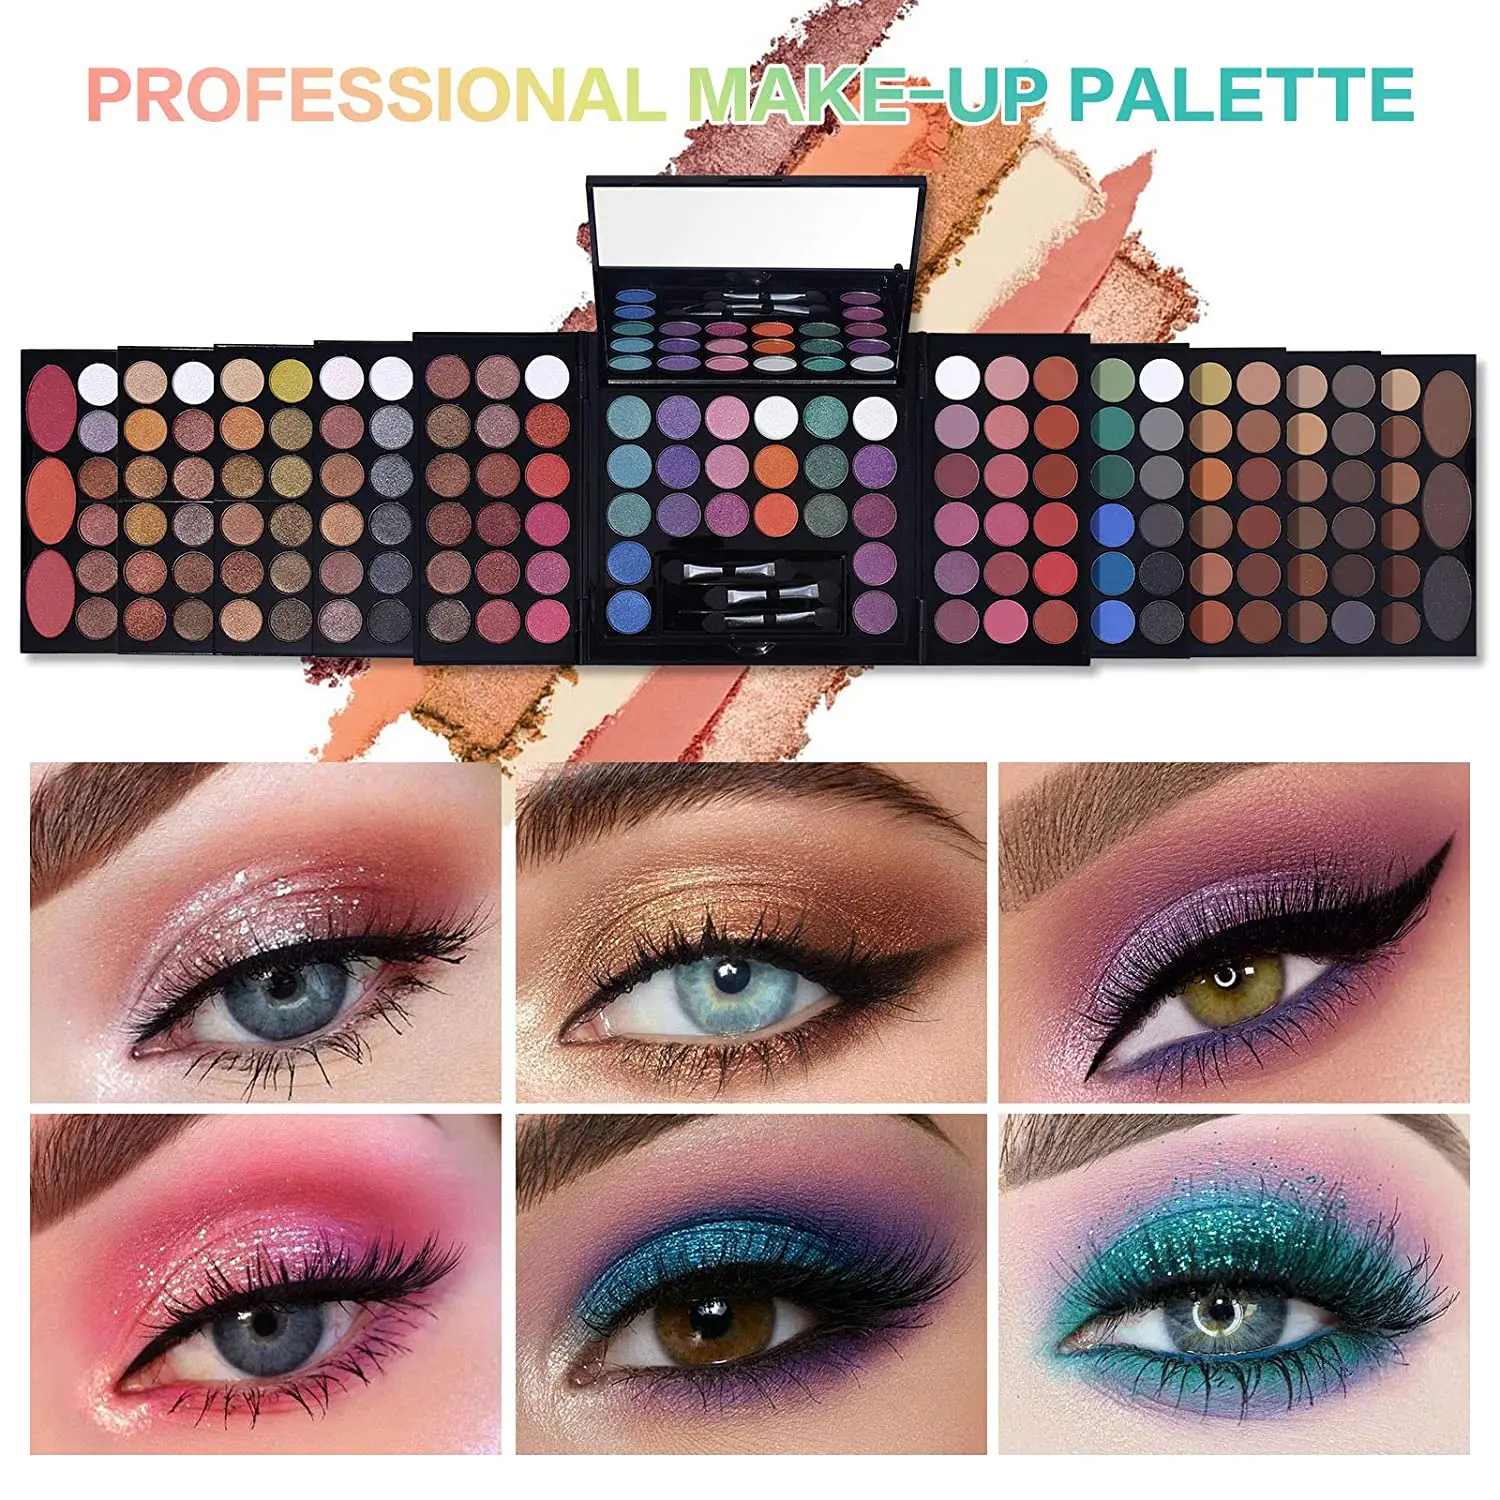 Makeup cosmetics 142 Colors Cosmetics Full Eyeshadow Palette makeup mirror Makeup sets